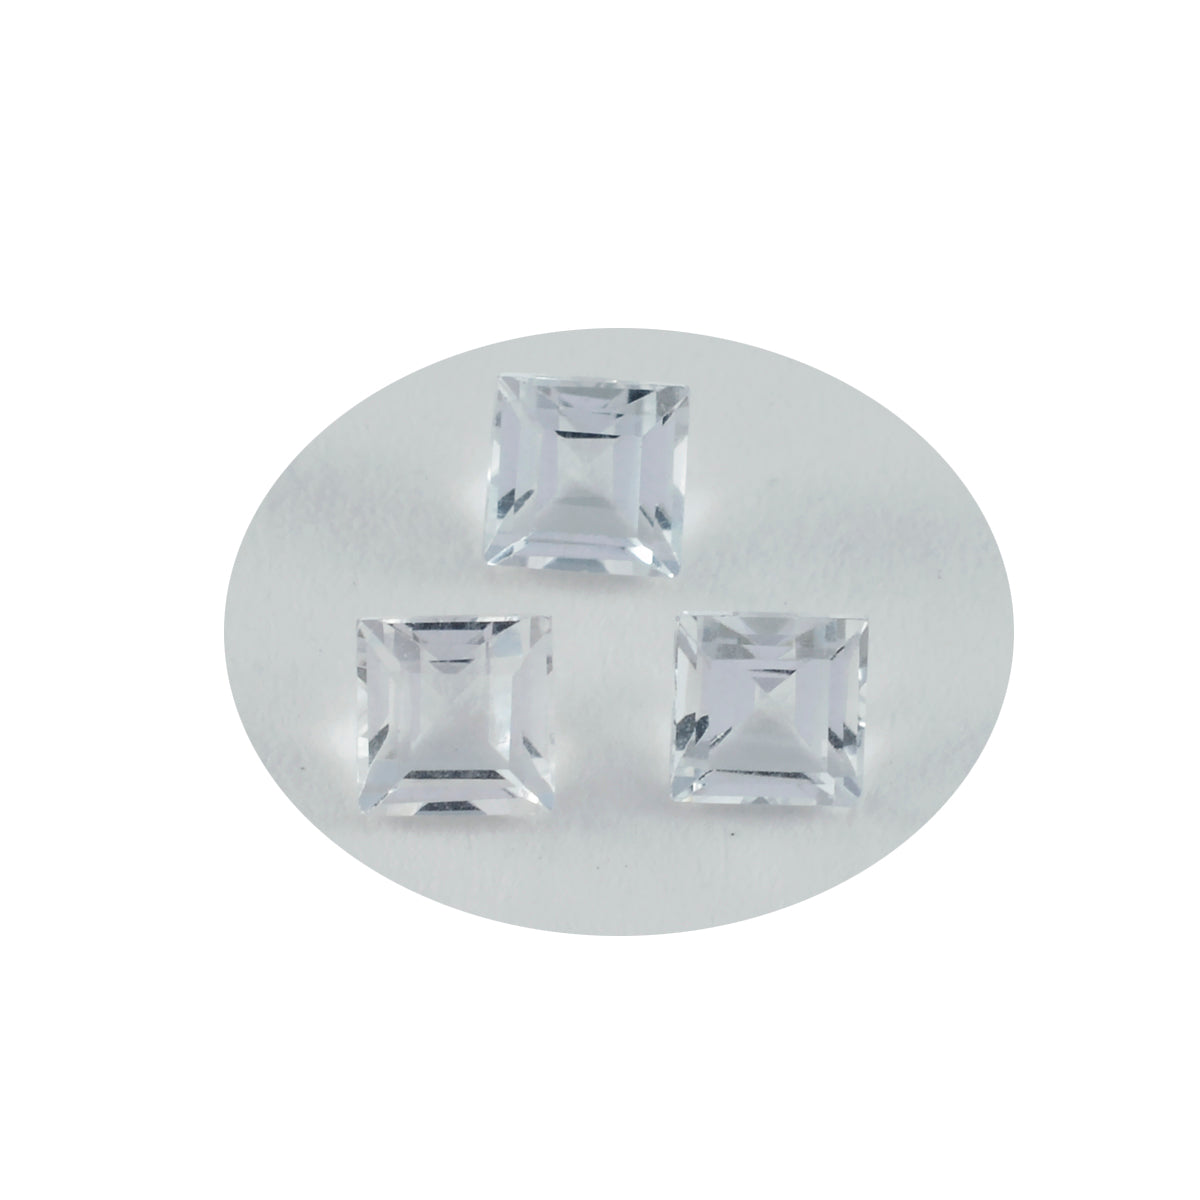 Riyogems 1PC White Crystal Quartz Faceted 5x5 mm Square Shape pretty Quality Loose Gems